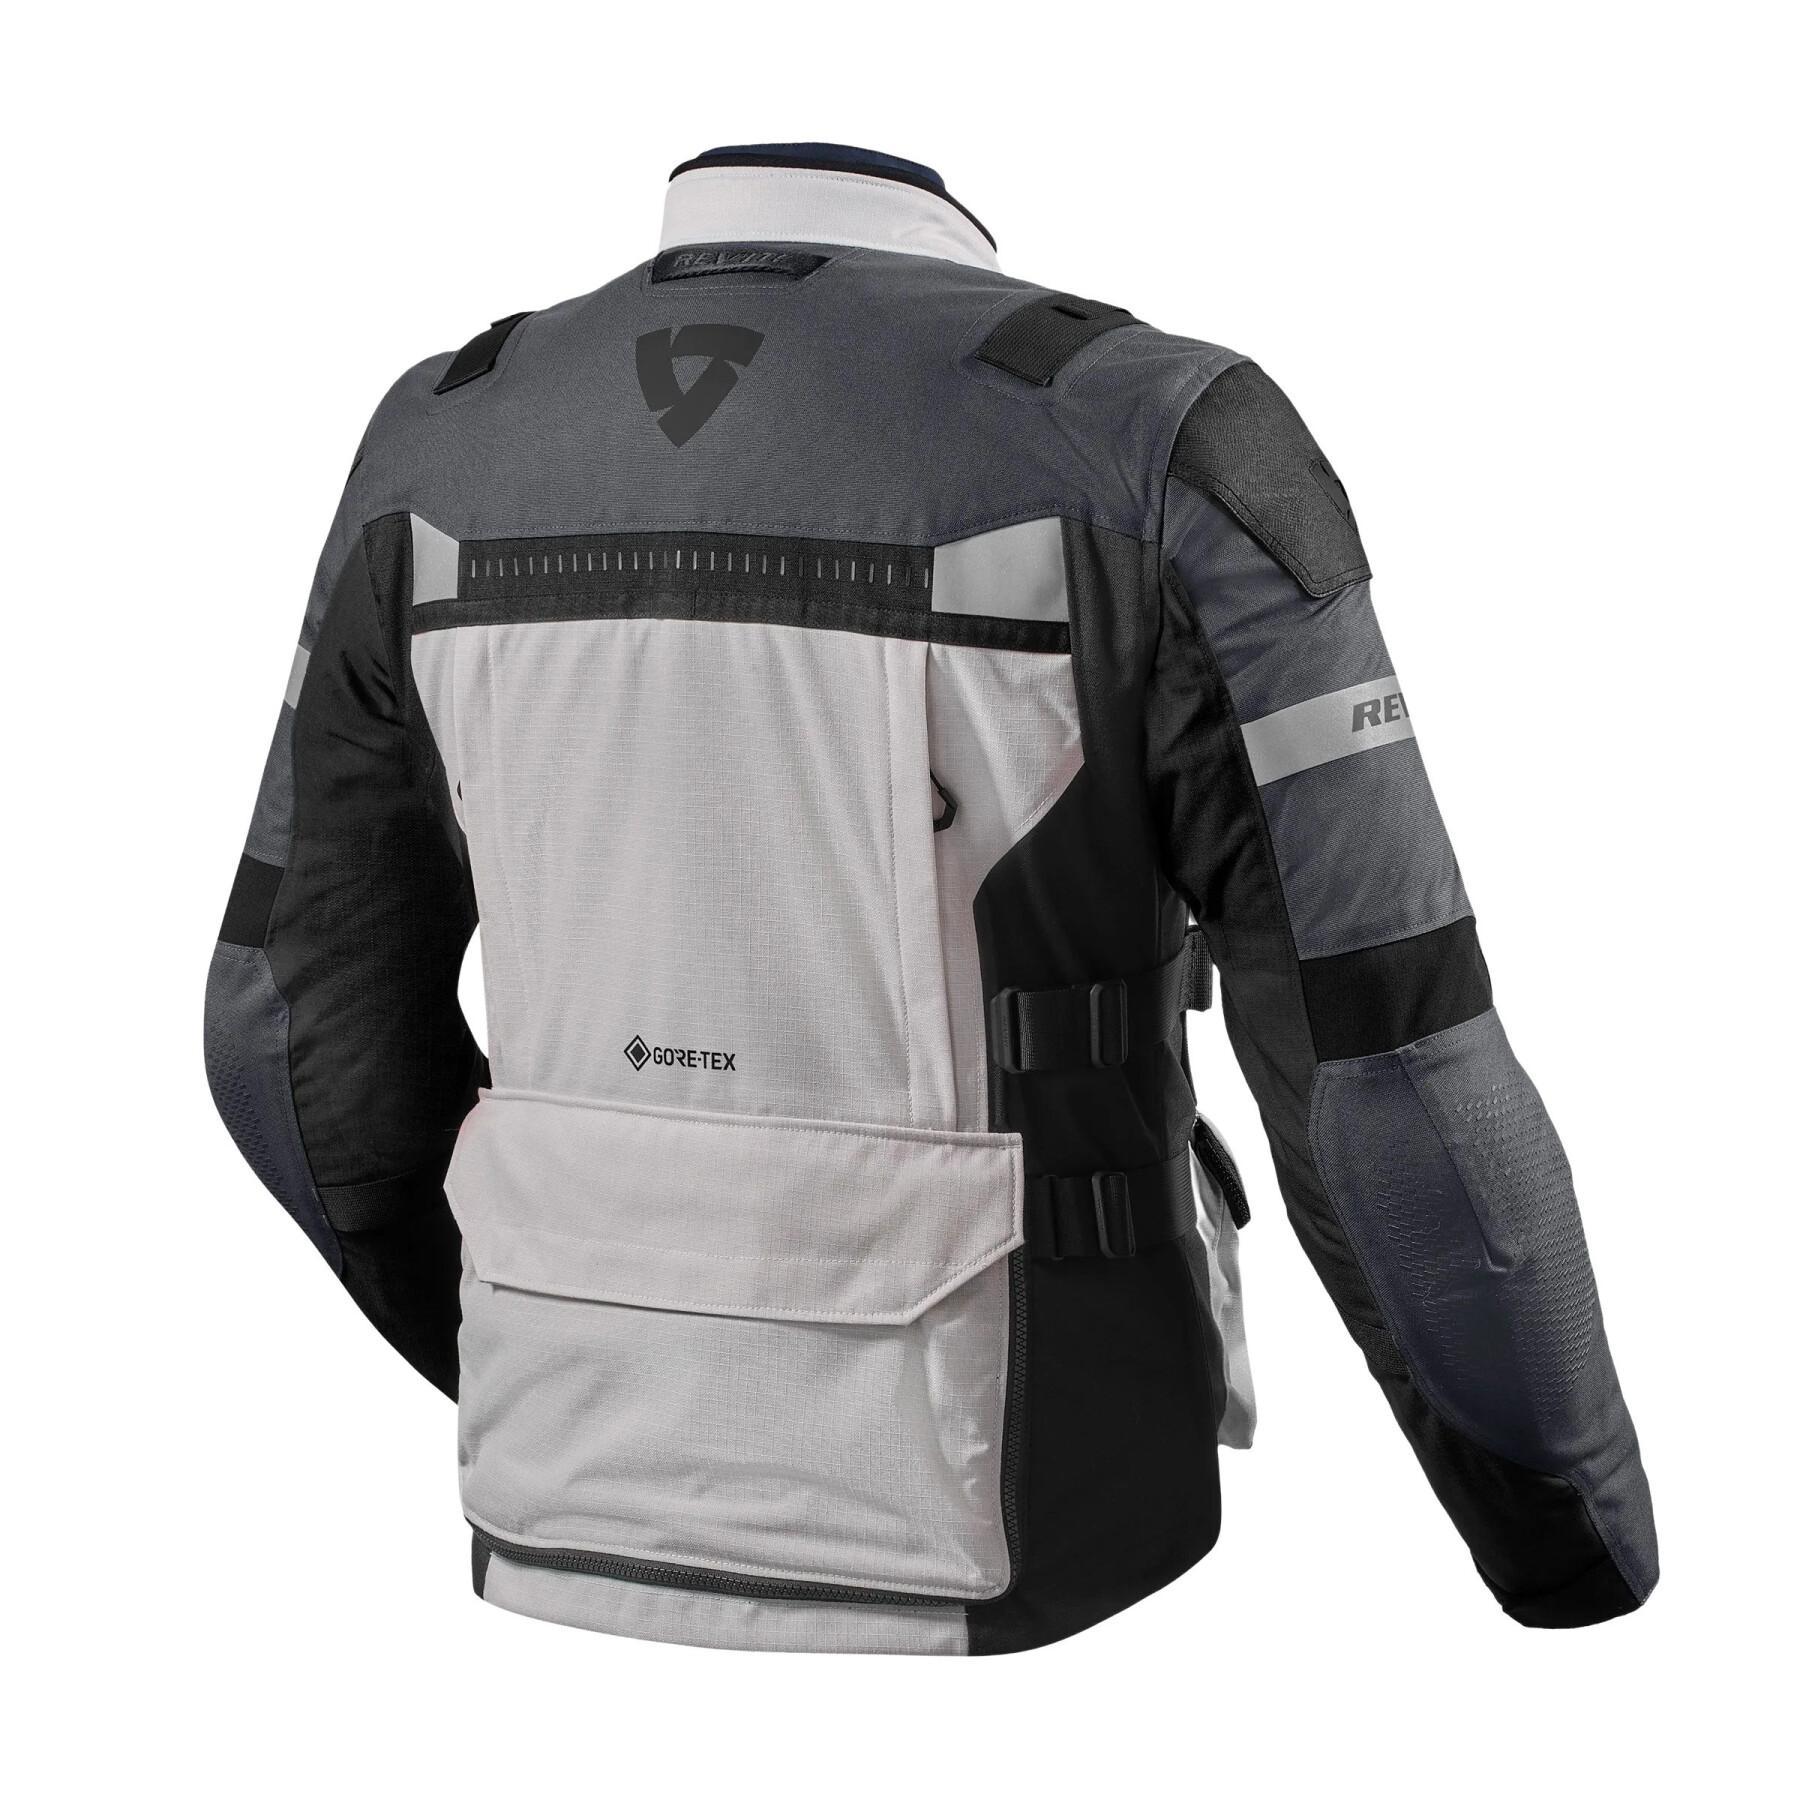 Motorcycle jacket Rev'it defender 3 GTX